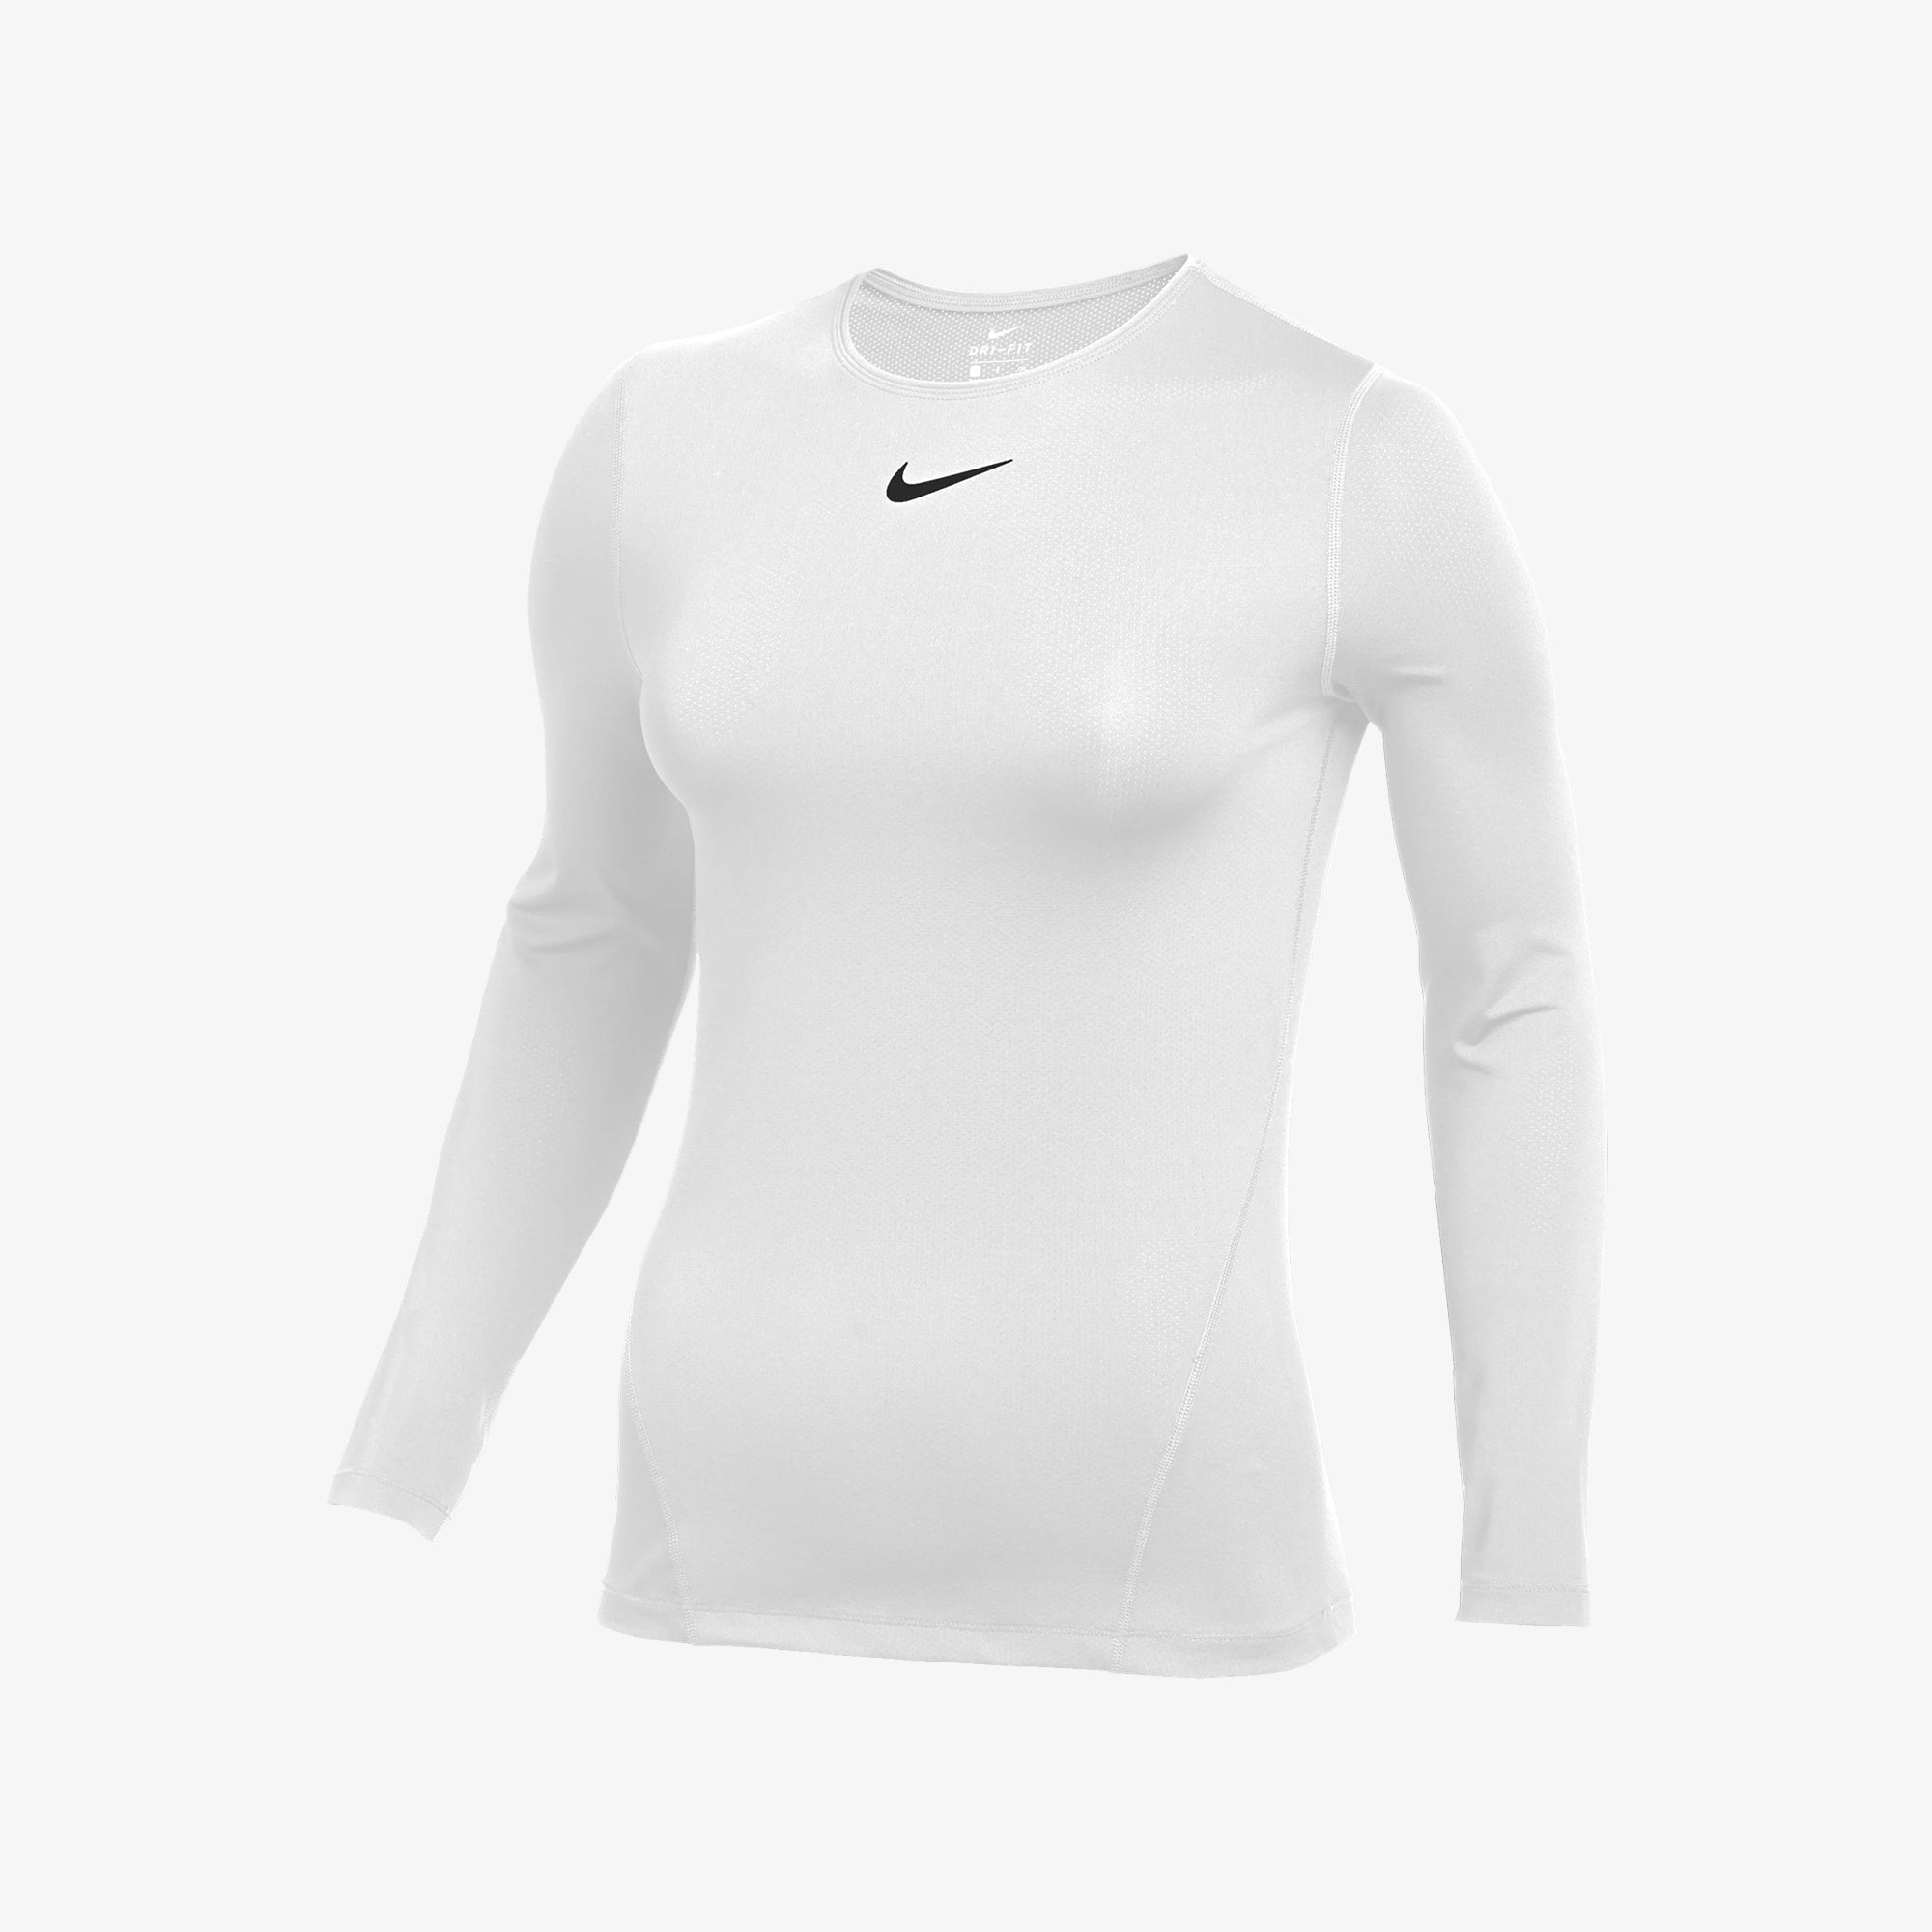 Nike Long-Sleeve Top